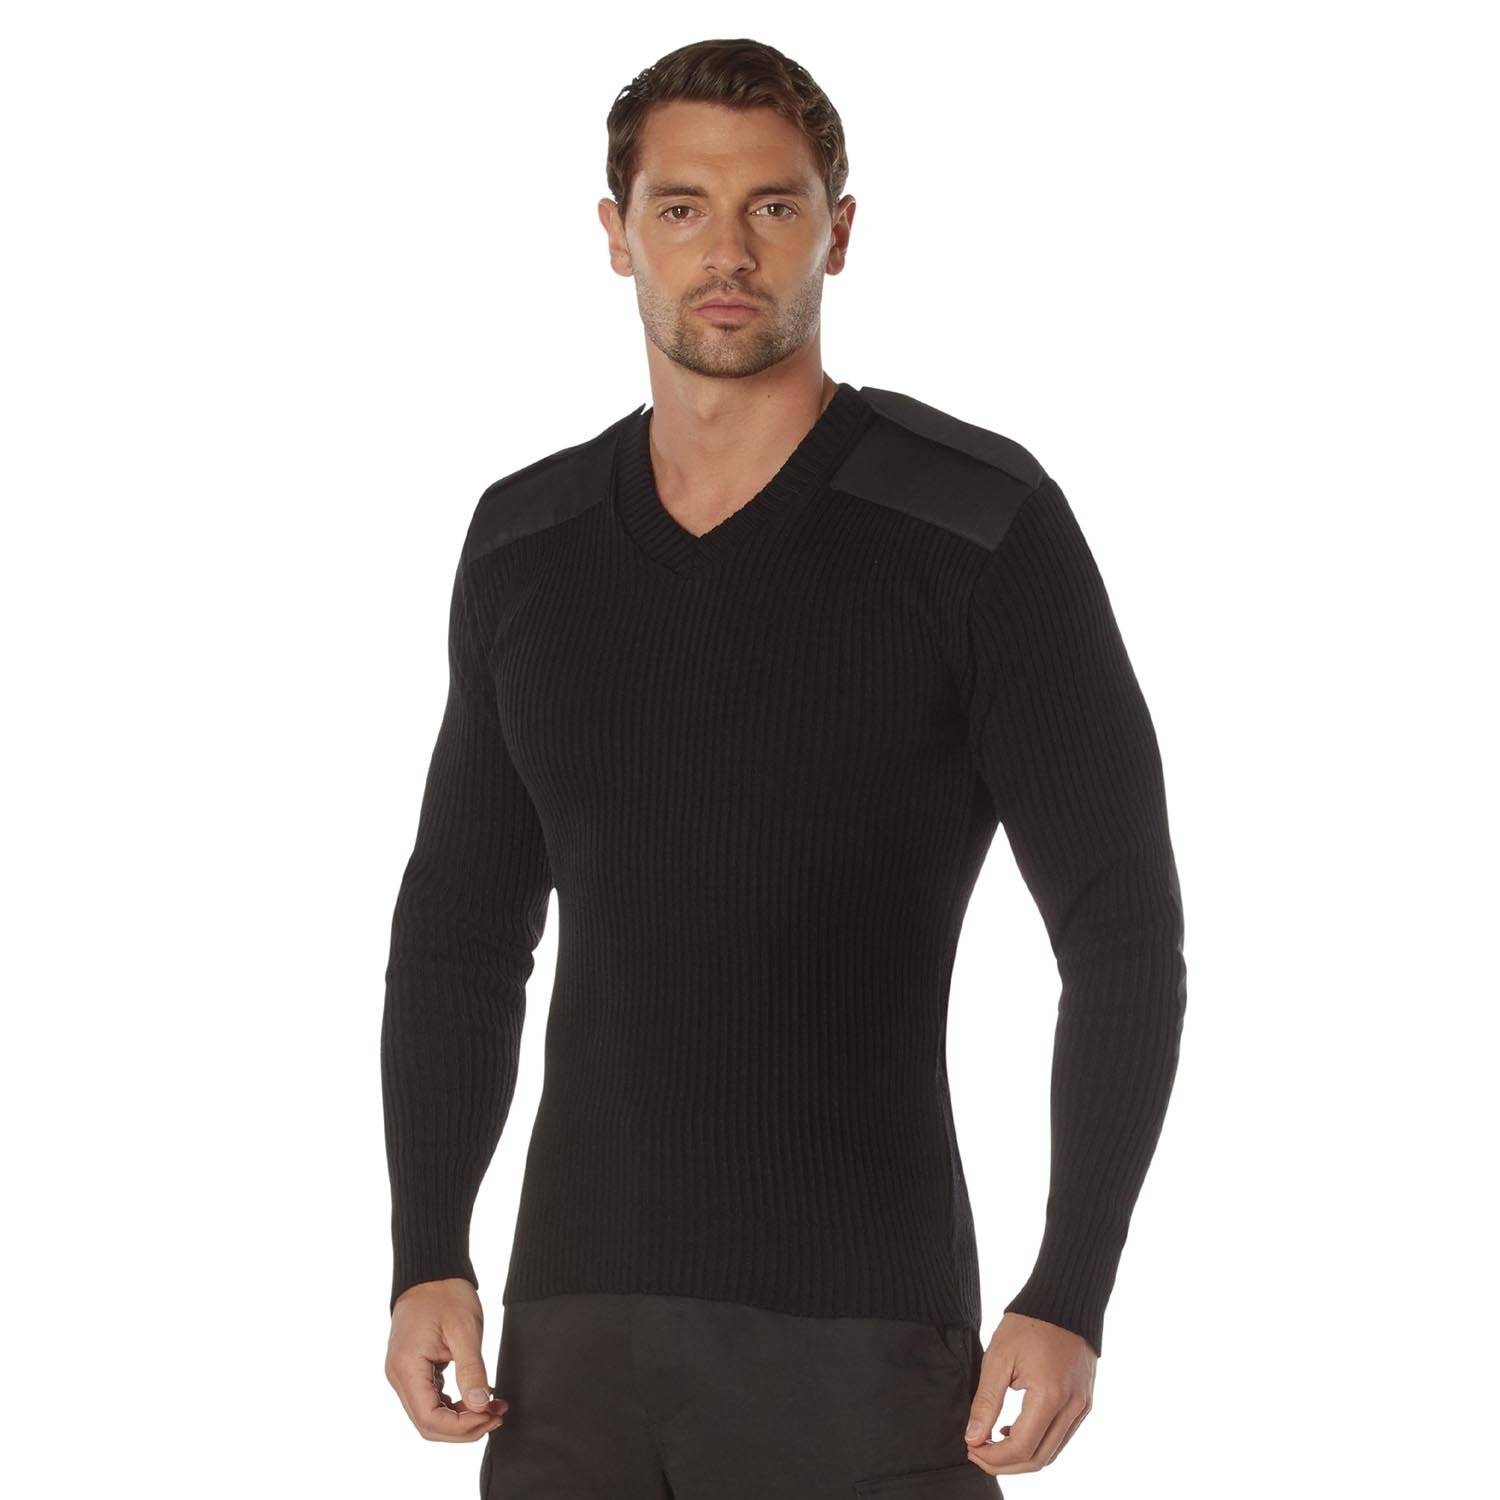 Rothco GI Style V-Neck Sweater